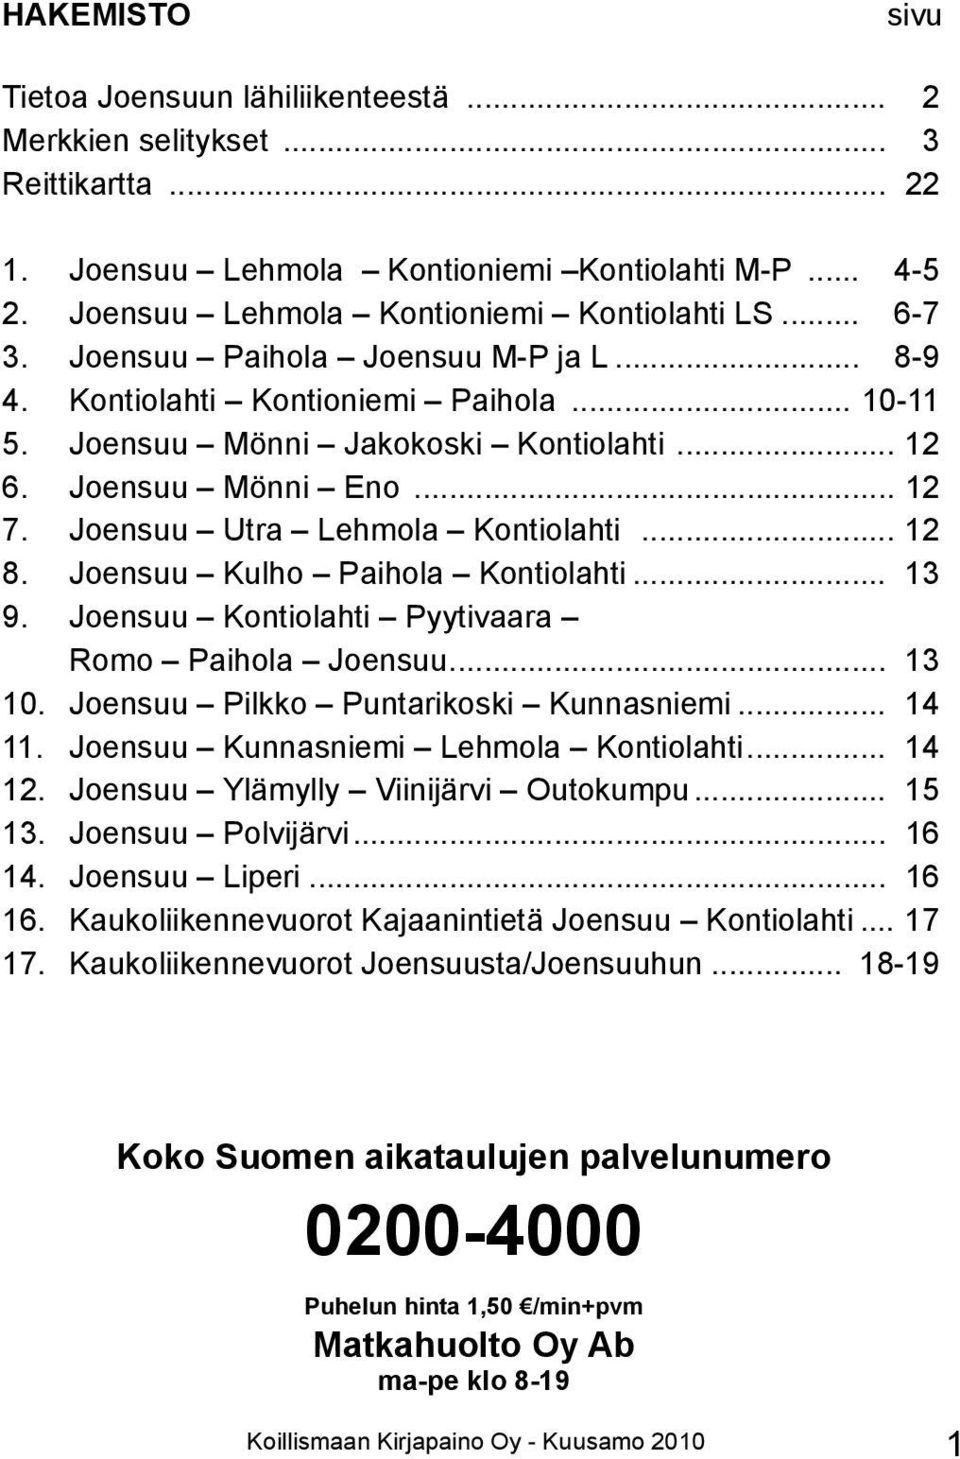 Joensuu Pikko Puntarikoski unnasniemi... 14 11. Joensuu unnasniemi ehmoa... 14 12. Joensuu ämyy Viinijärvi Outokumpu... 15 13. Joensuu Povijärvi... 16 14. Joensuu iperi... 16 16.